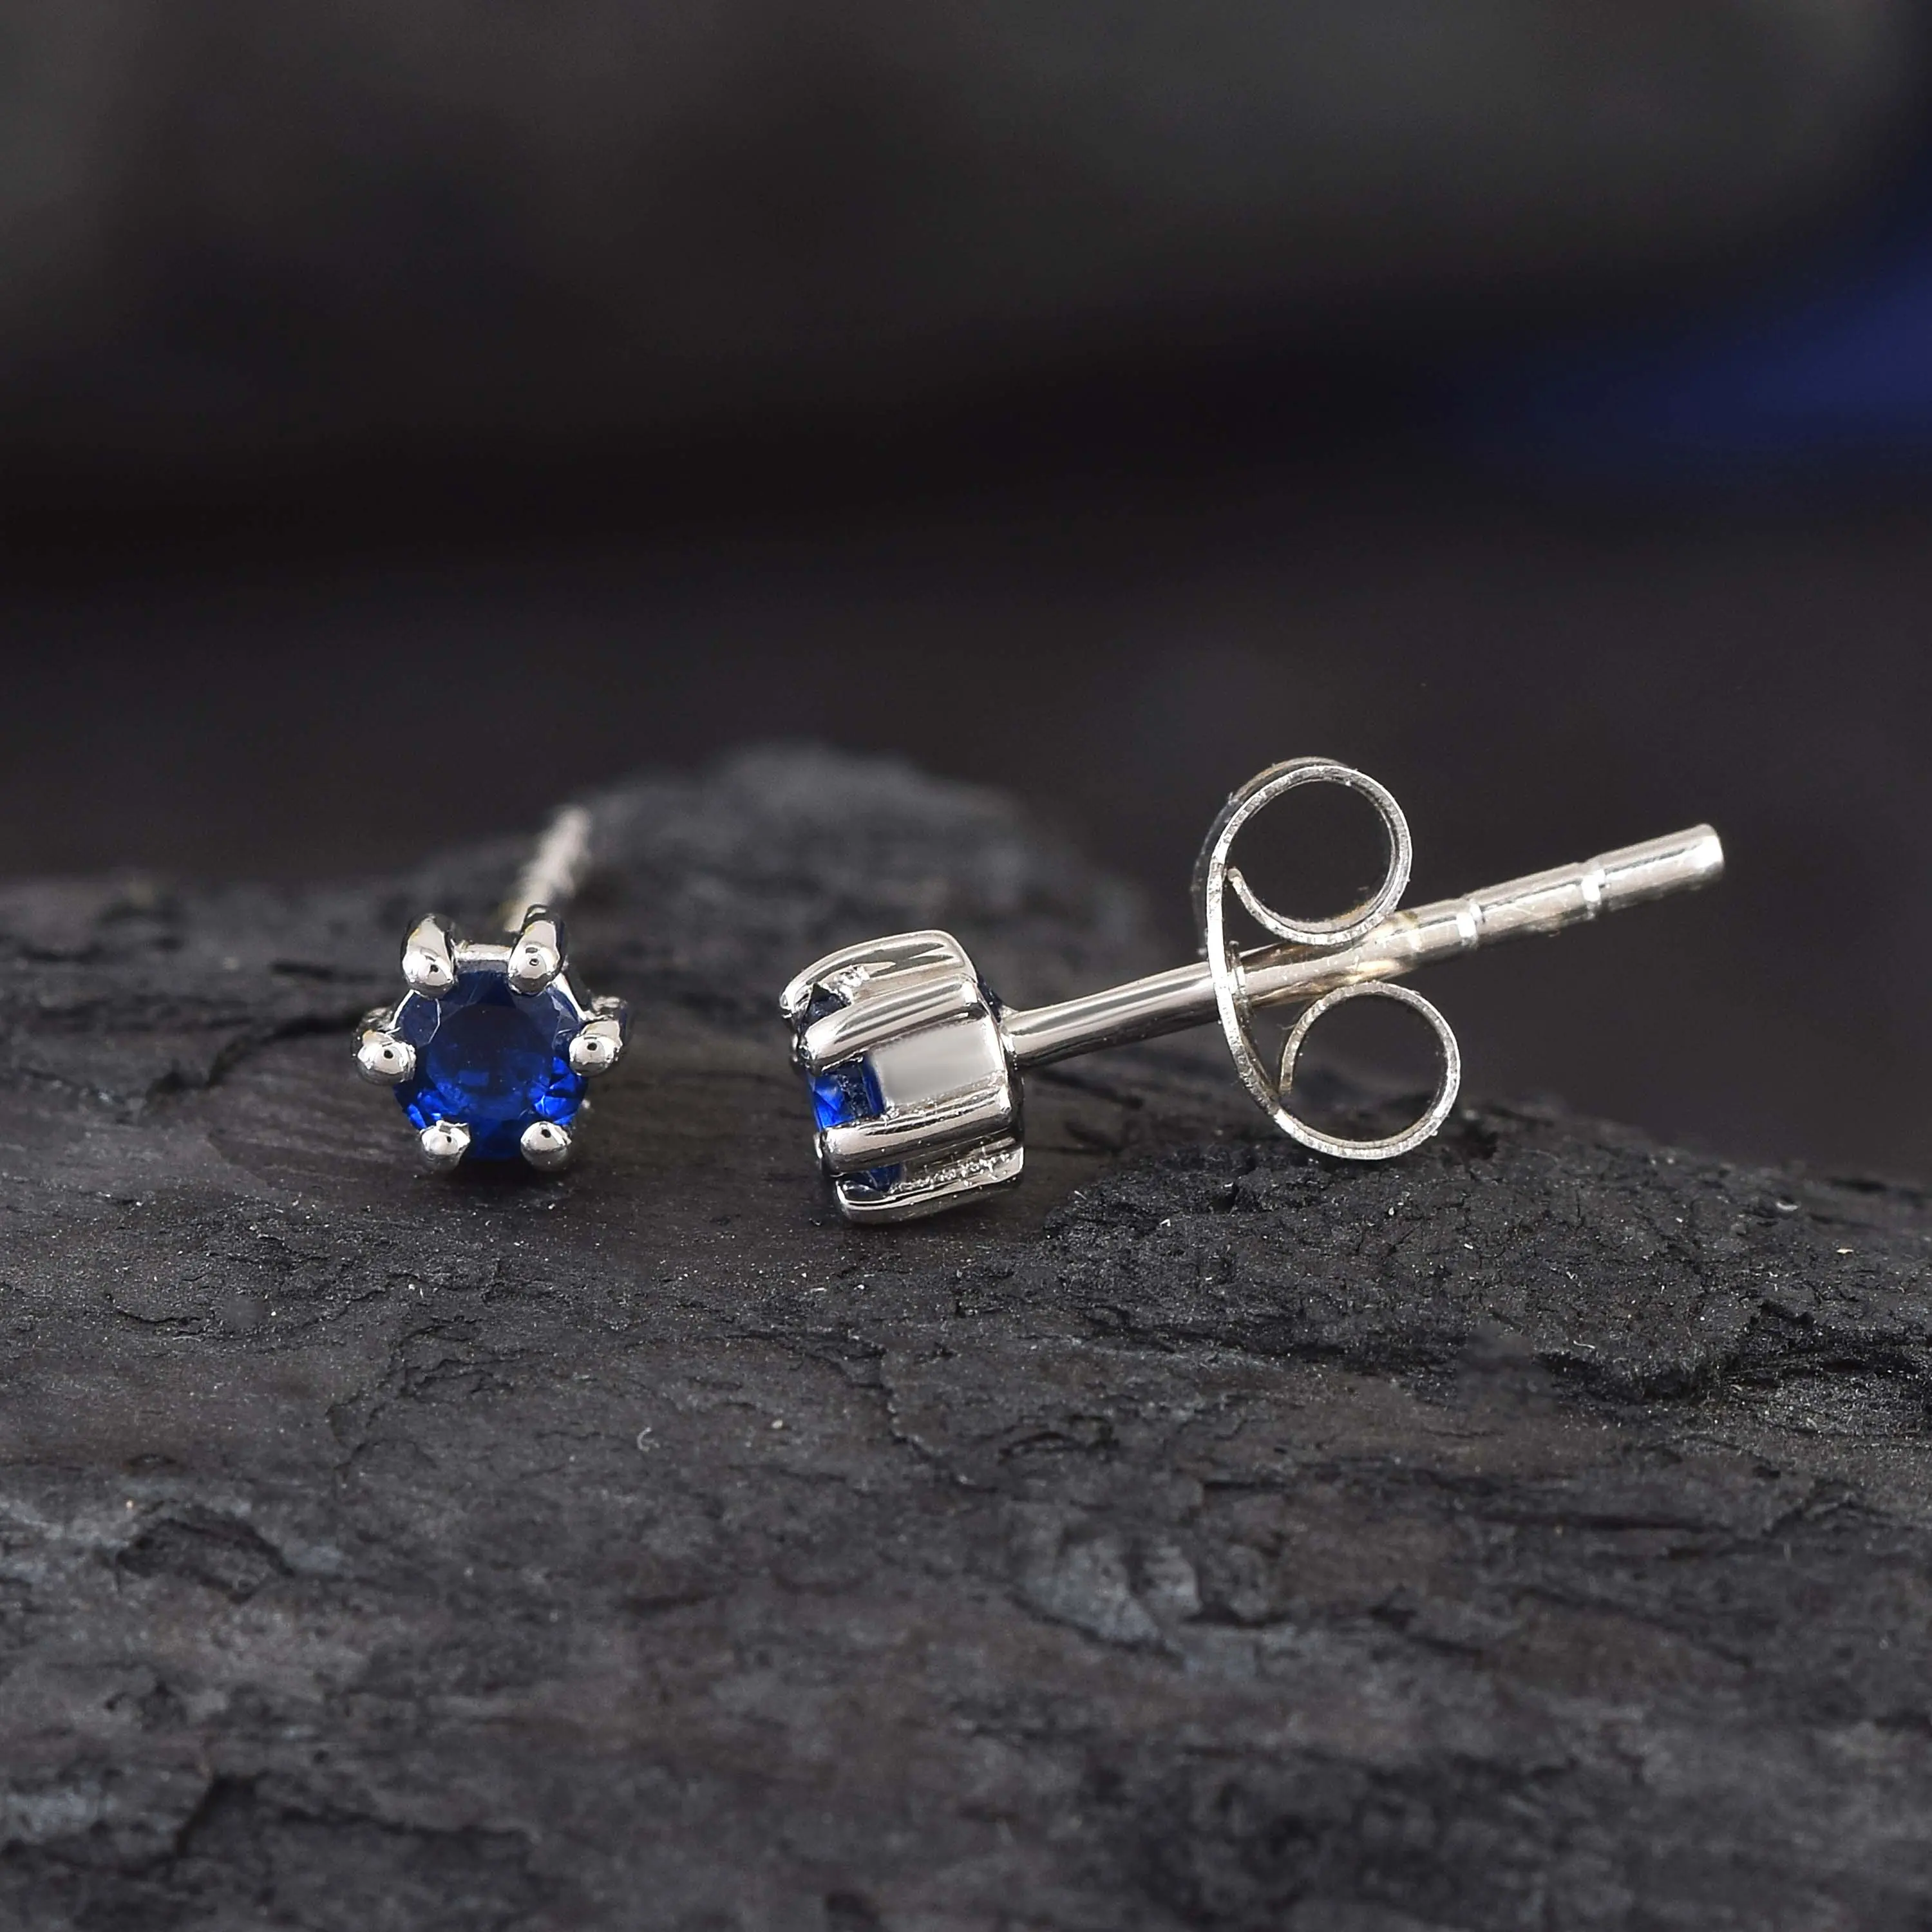 Minimalist Studs 925 Sterling Silver Earrings 3mm Pendant Hight Tiny Amethyst Stone Signet Beautiful Blue Pendant Earring